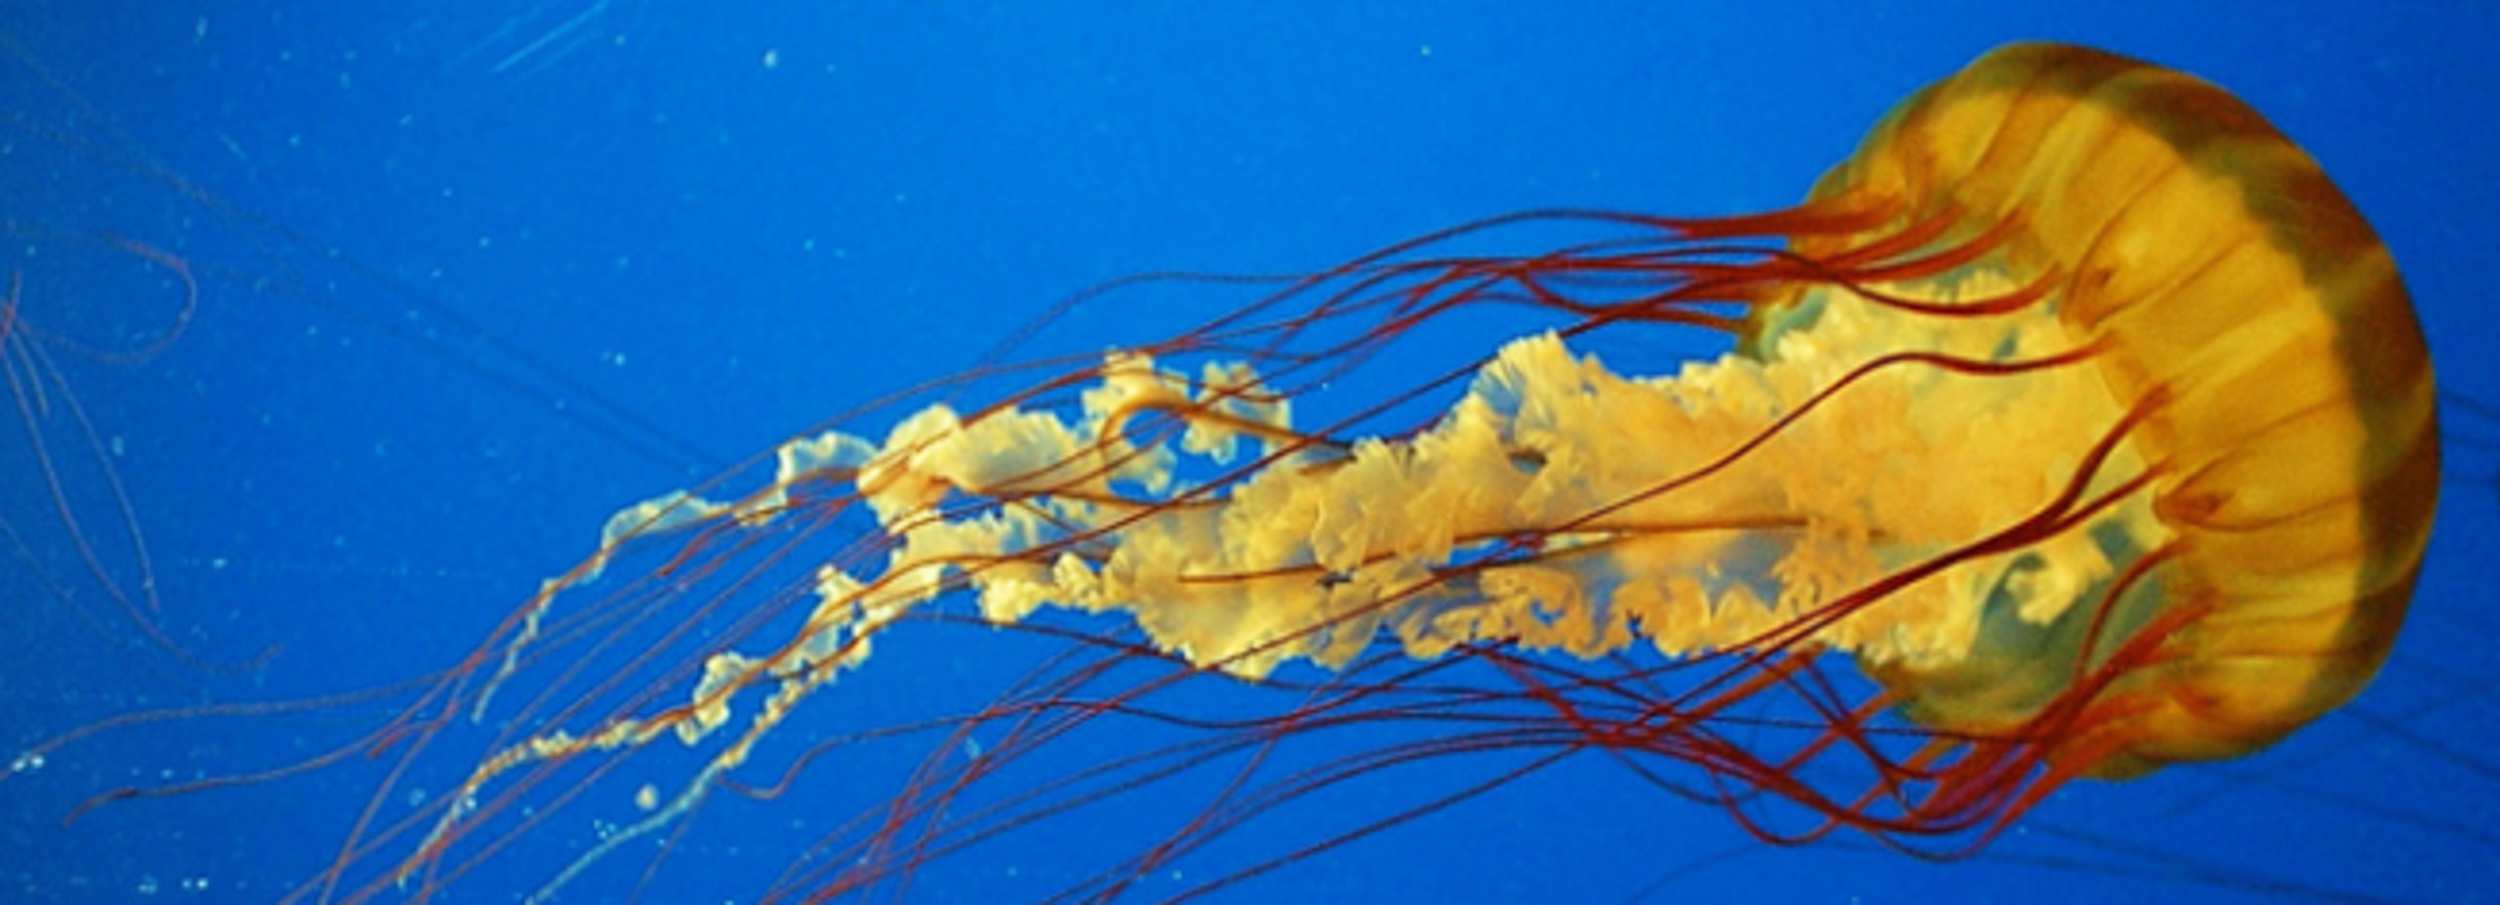 Pacific sea nettles - beautiful, blind and brainless predators ...